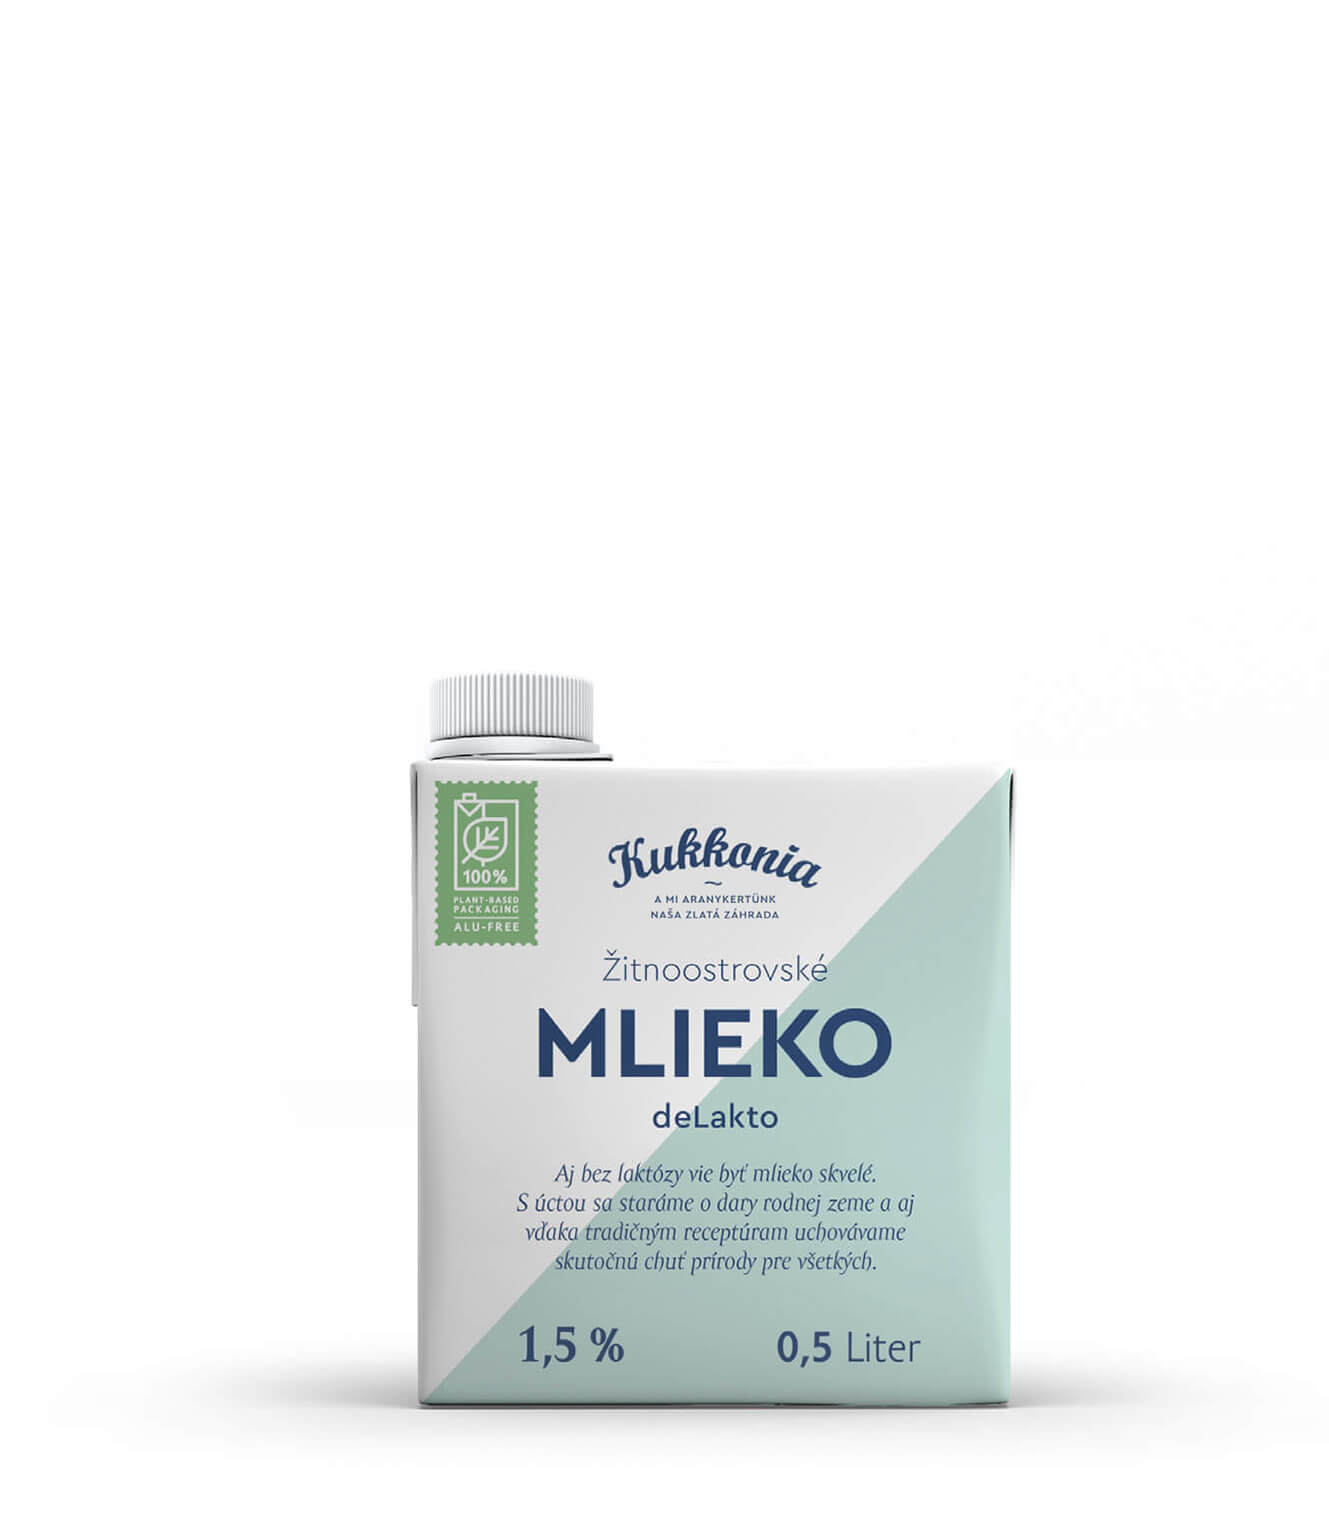 Kukkonia Milk delacto-05